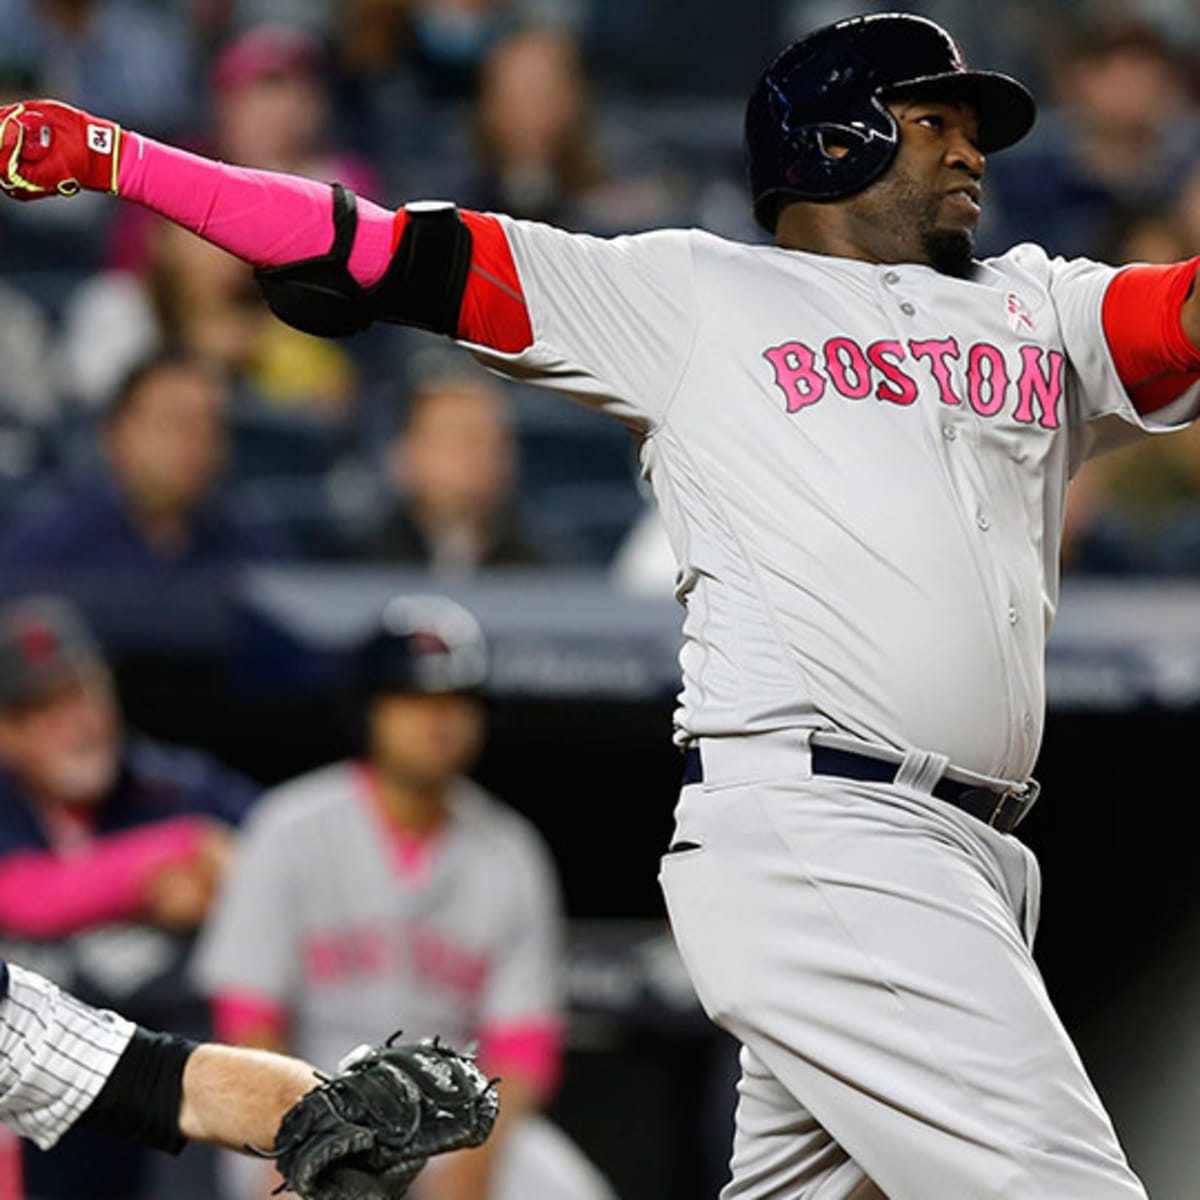 David Ortiz - Boston Red Sox Designated Hitter - ESPN